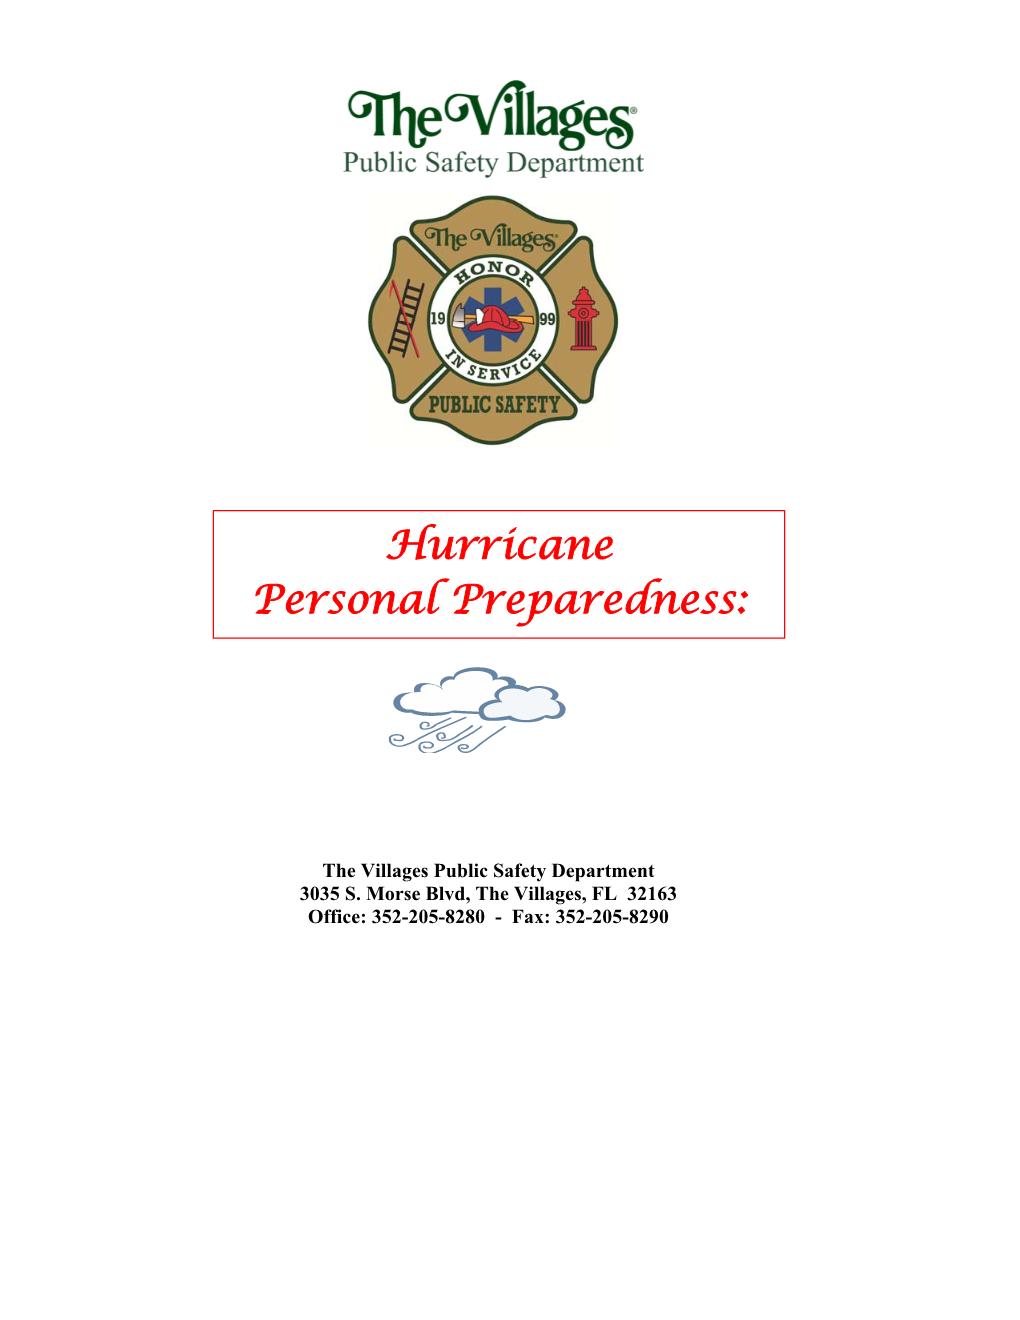 Hurricane Personal Preparedness